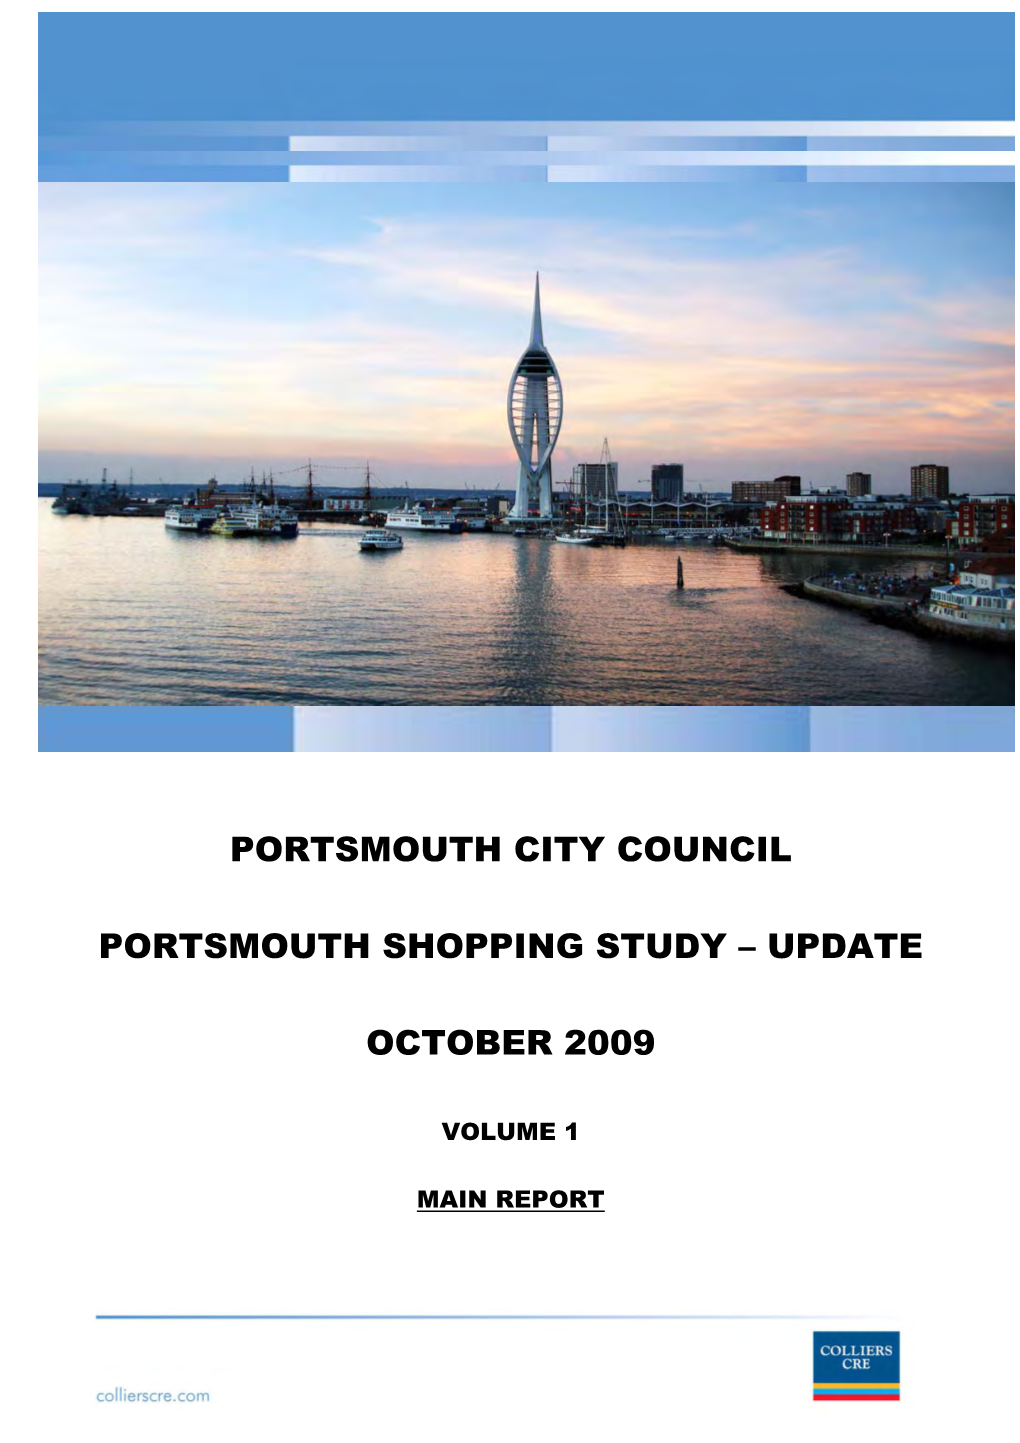 Portsmouth Shopping Study 2009 Update